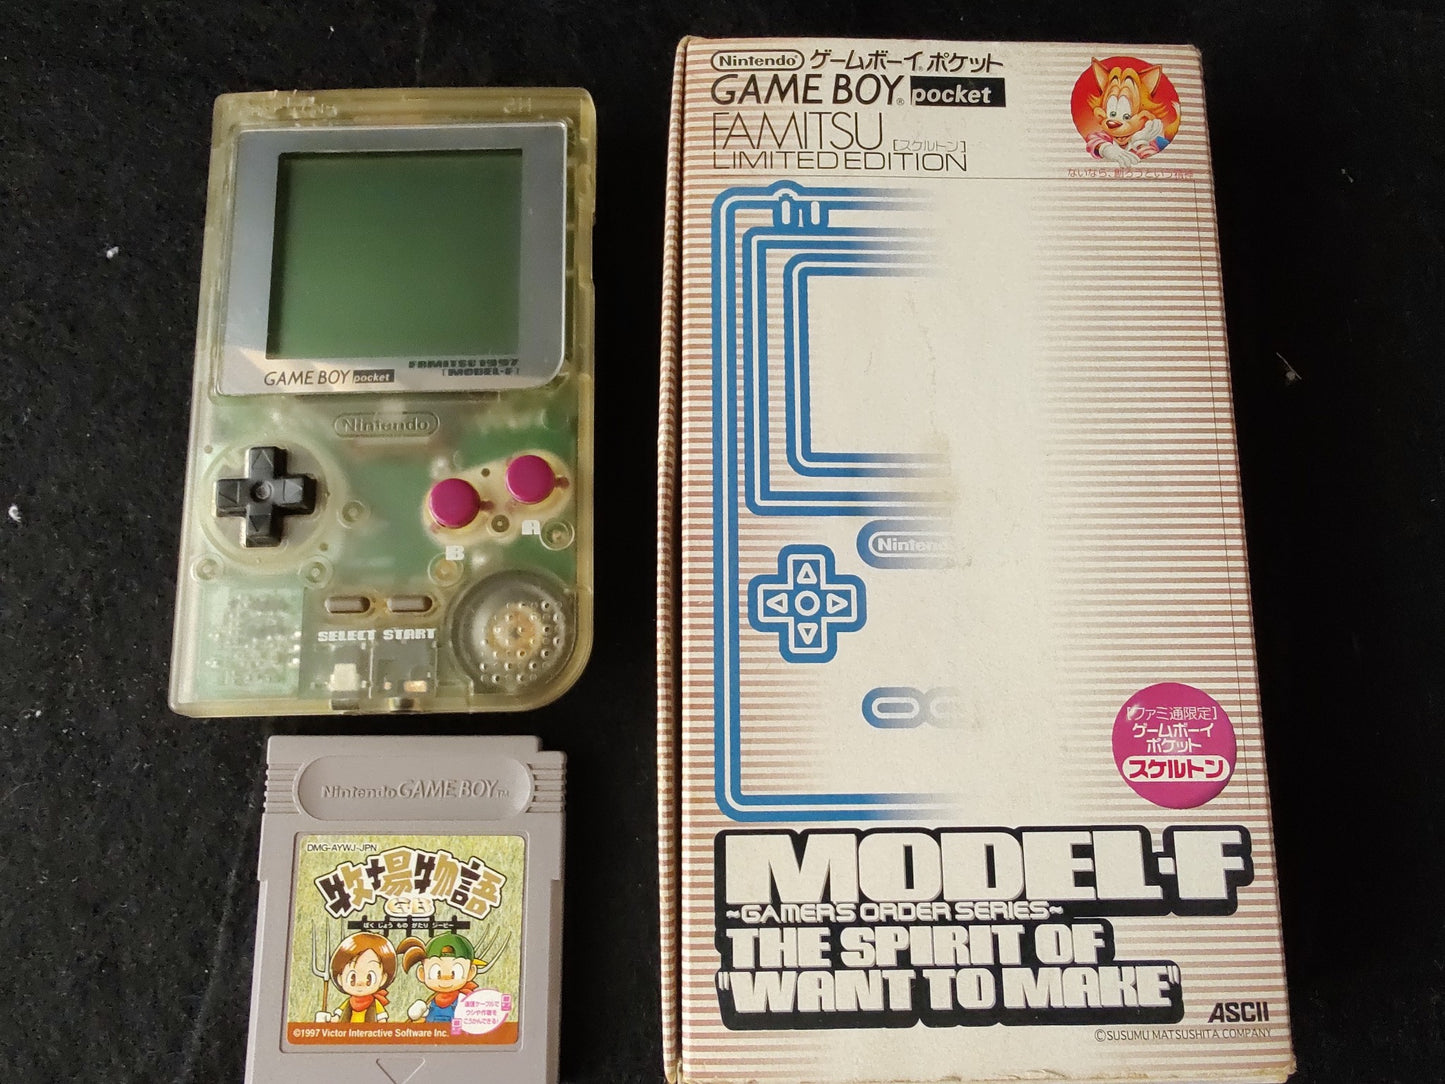 Gameboy Pocket FAMITSU Skeleton MGB-001 Console Game and box set